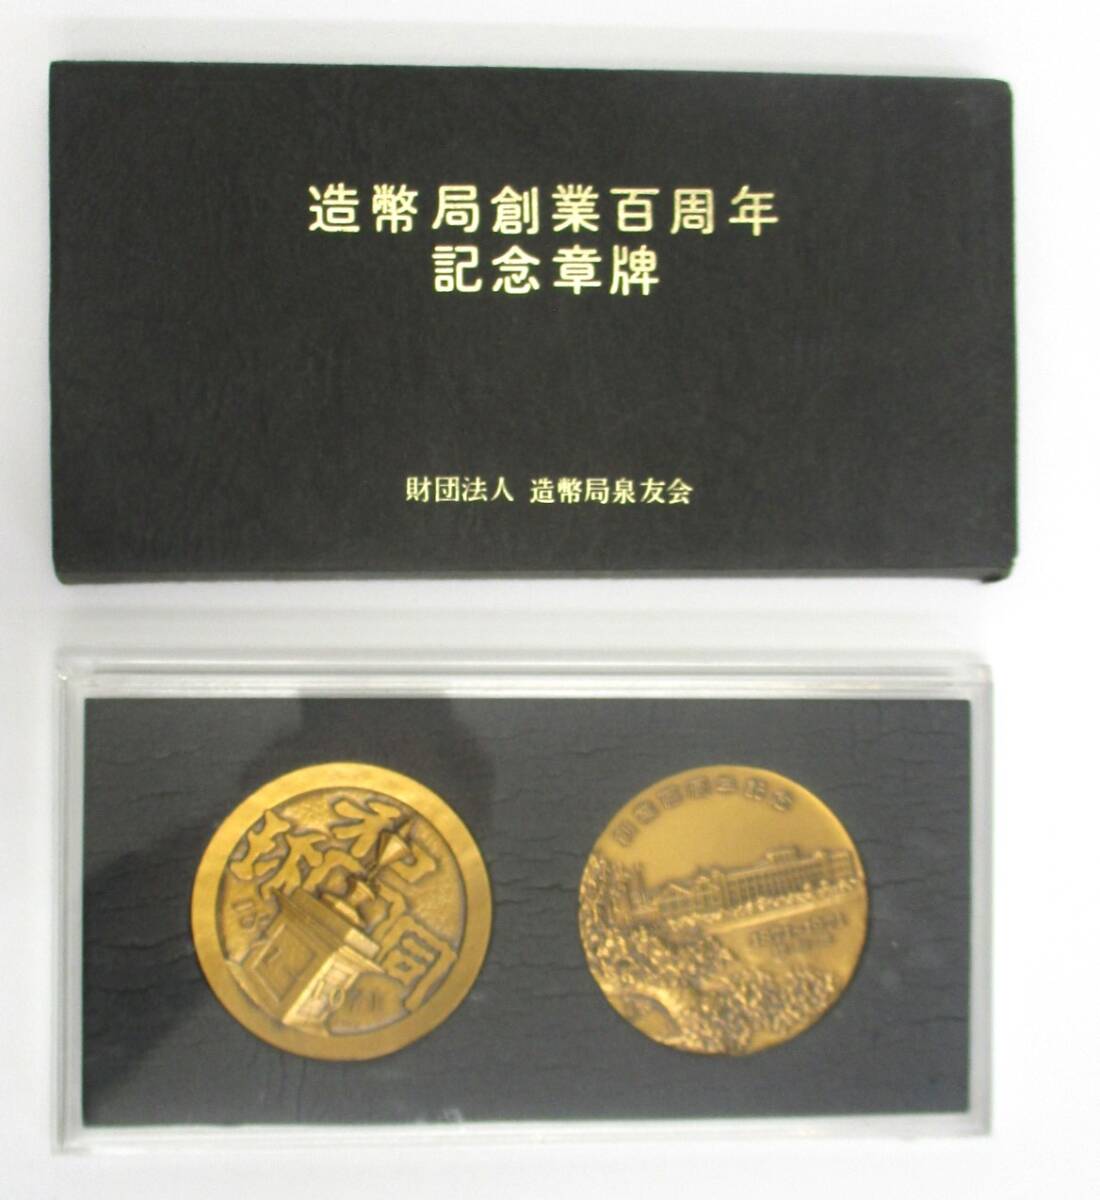 【5-32】造幣局創業100周年記念章牌 造幣局泉友会 メダル ケース入の画像1